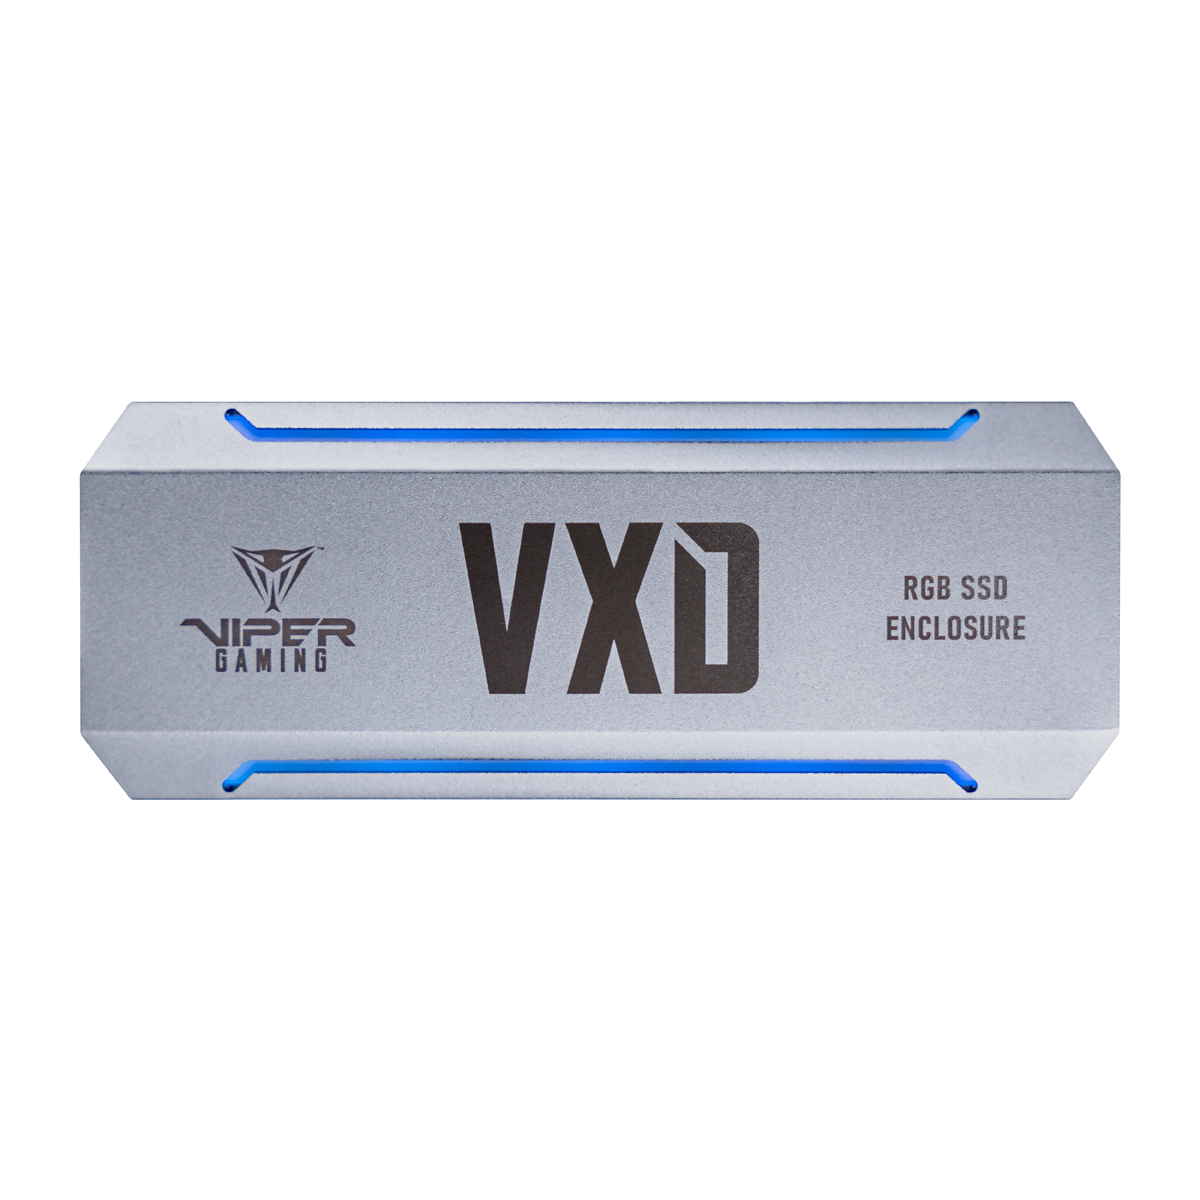 [COAPTVPV860UPRGM] RACK PARA SSD PATRIOT VIPER VXD 860 RGB, PCIE M.2, 2230/2242/2260/2280, SEQ 1000 MB/S.